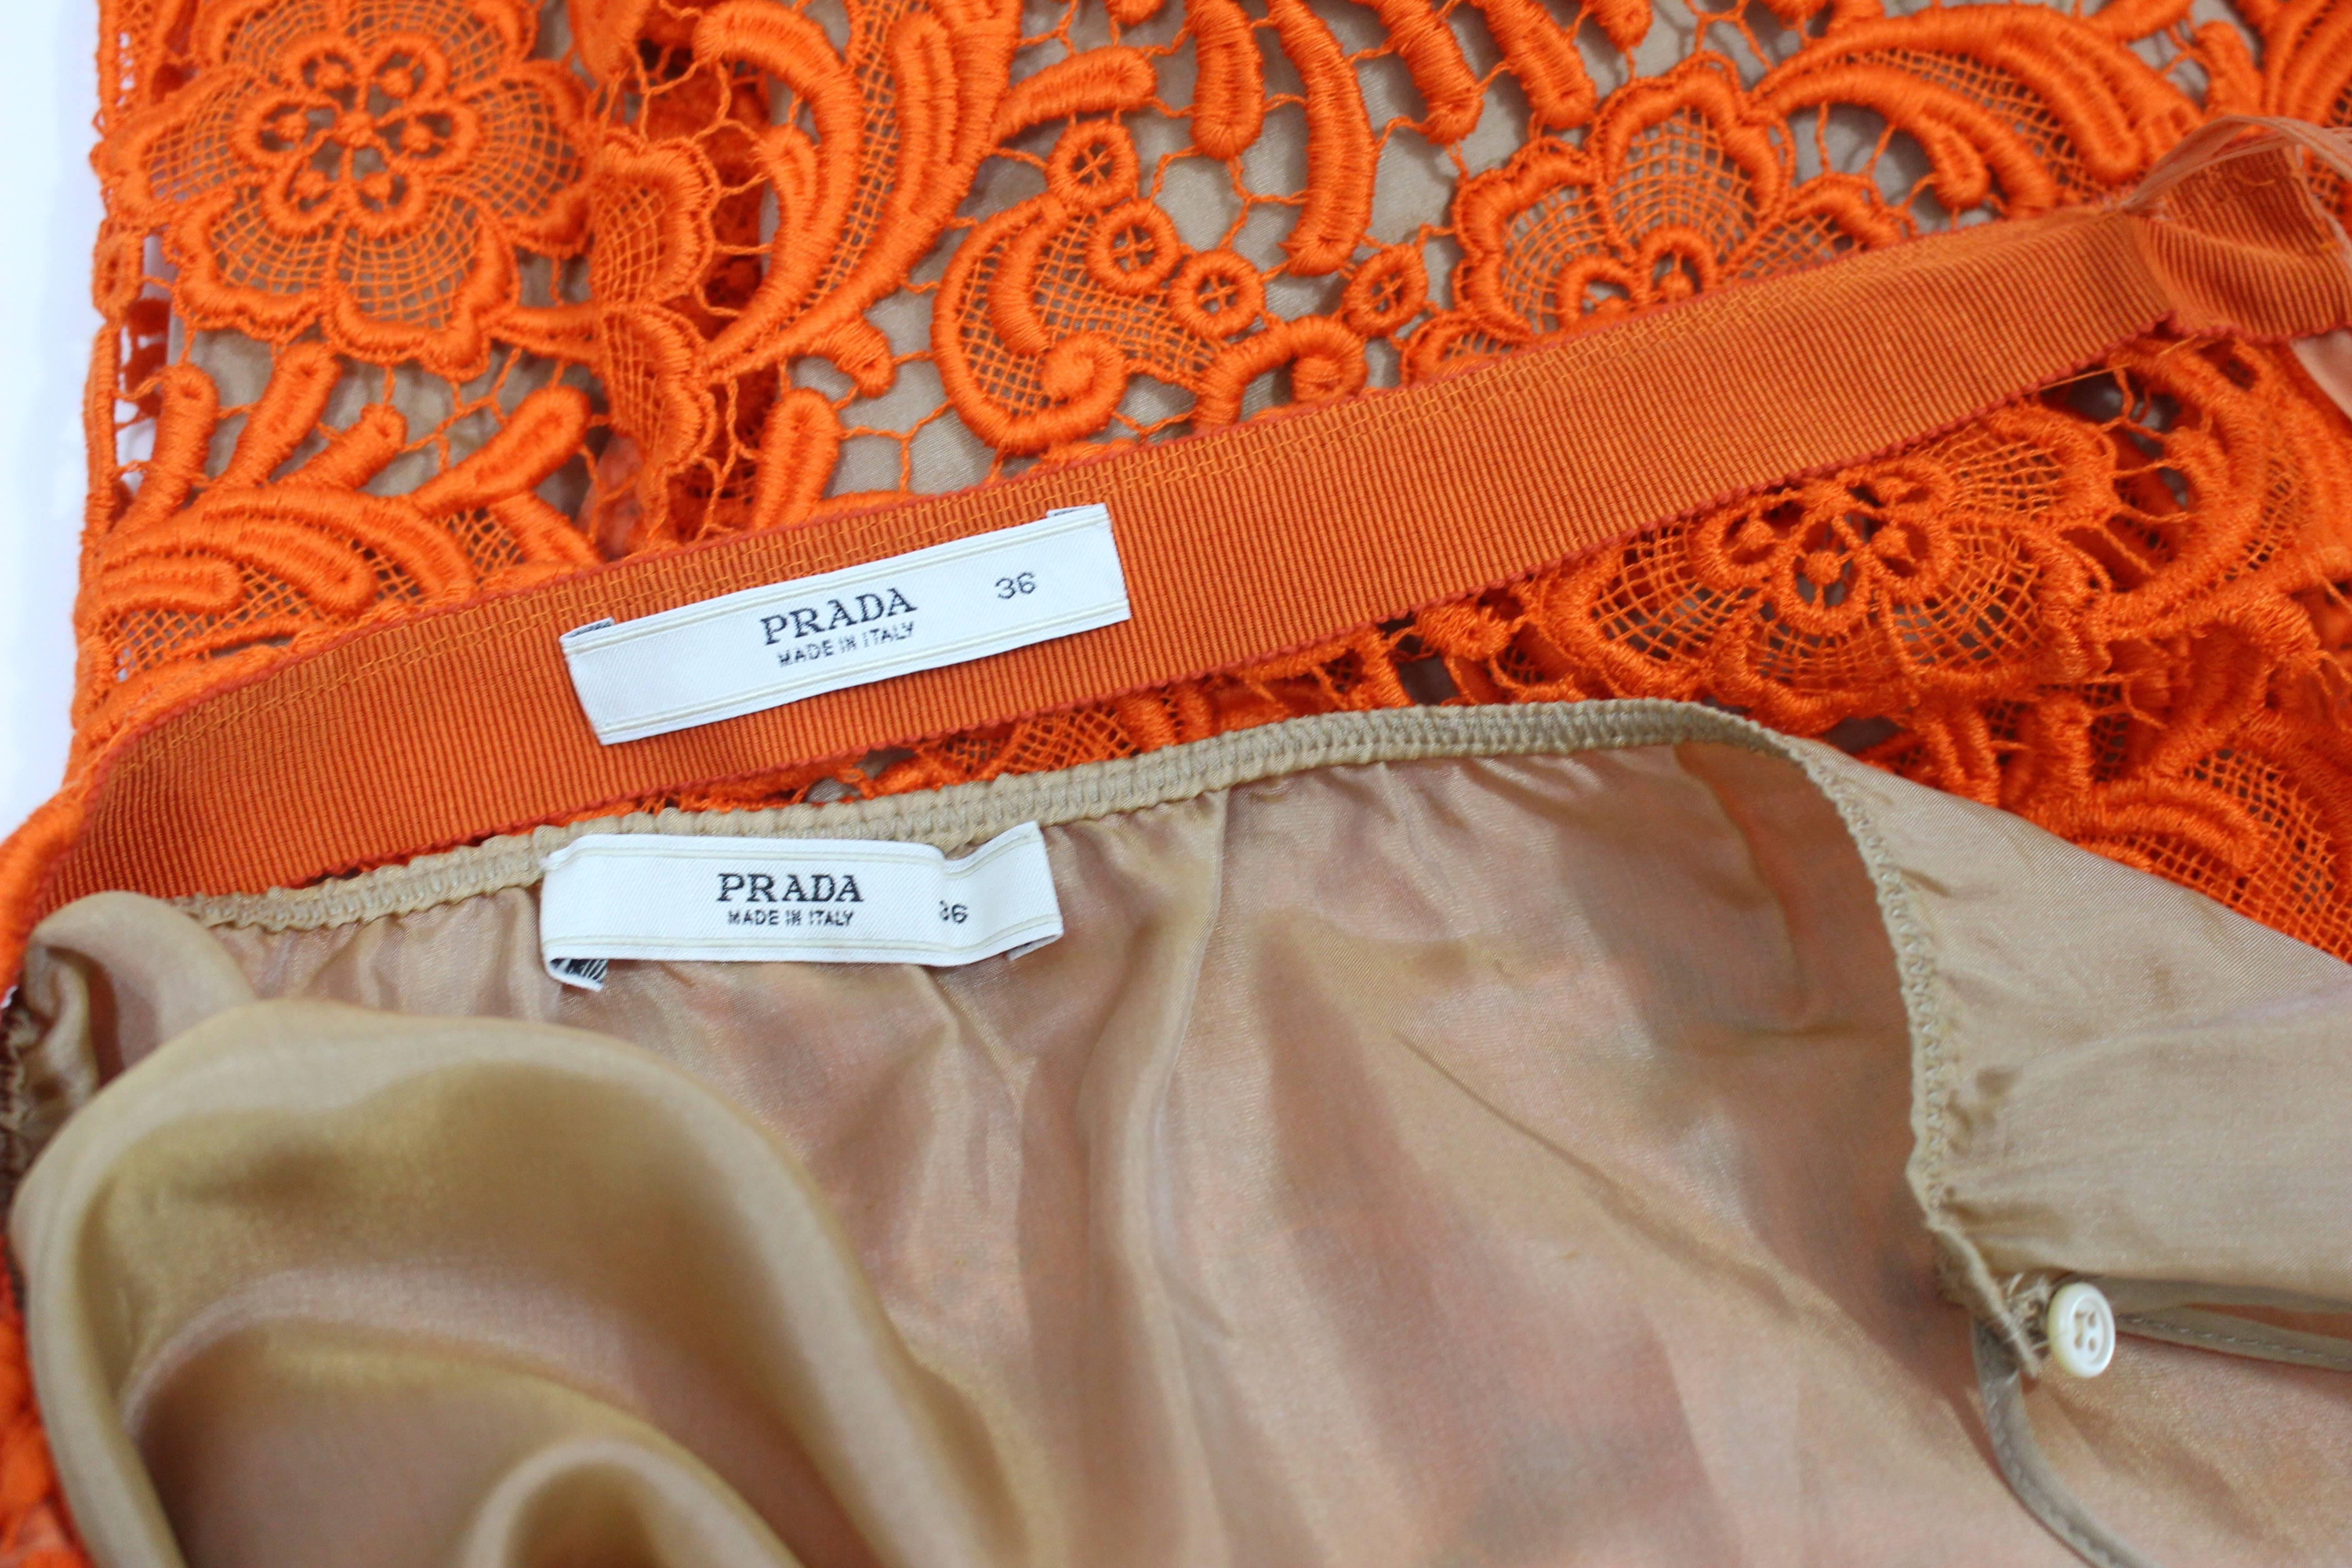  Fall 2008 Prada Orange Guipure Lace Skirt Runway Look #20 1